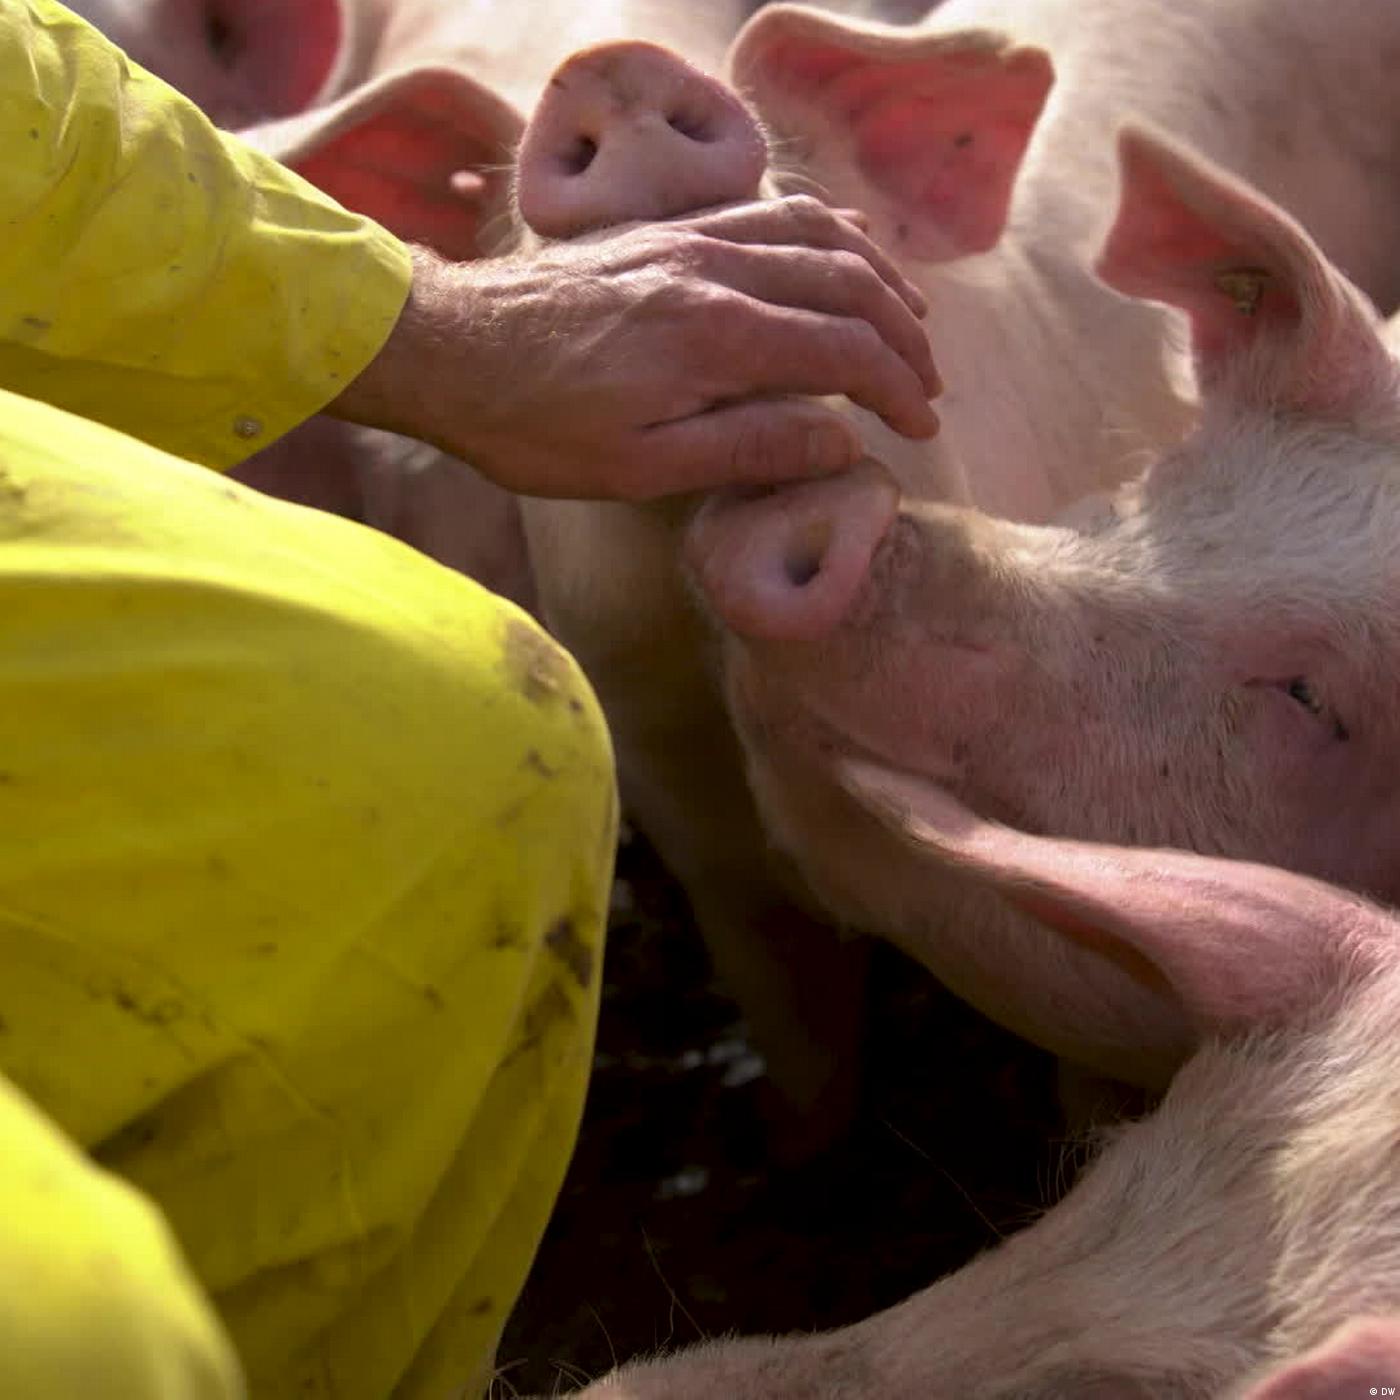 Dutch farmer saves Germany's last socialist pigs